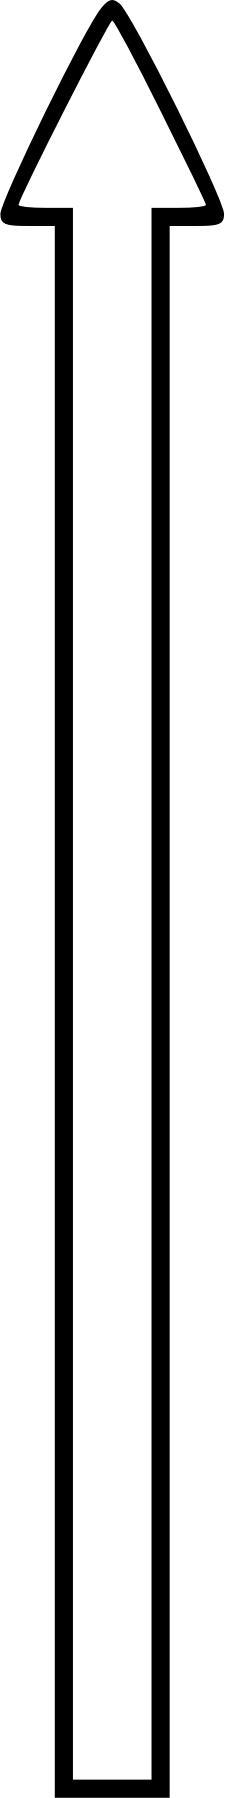 Simple Long Up Arrow White/Black Border png transparent